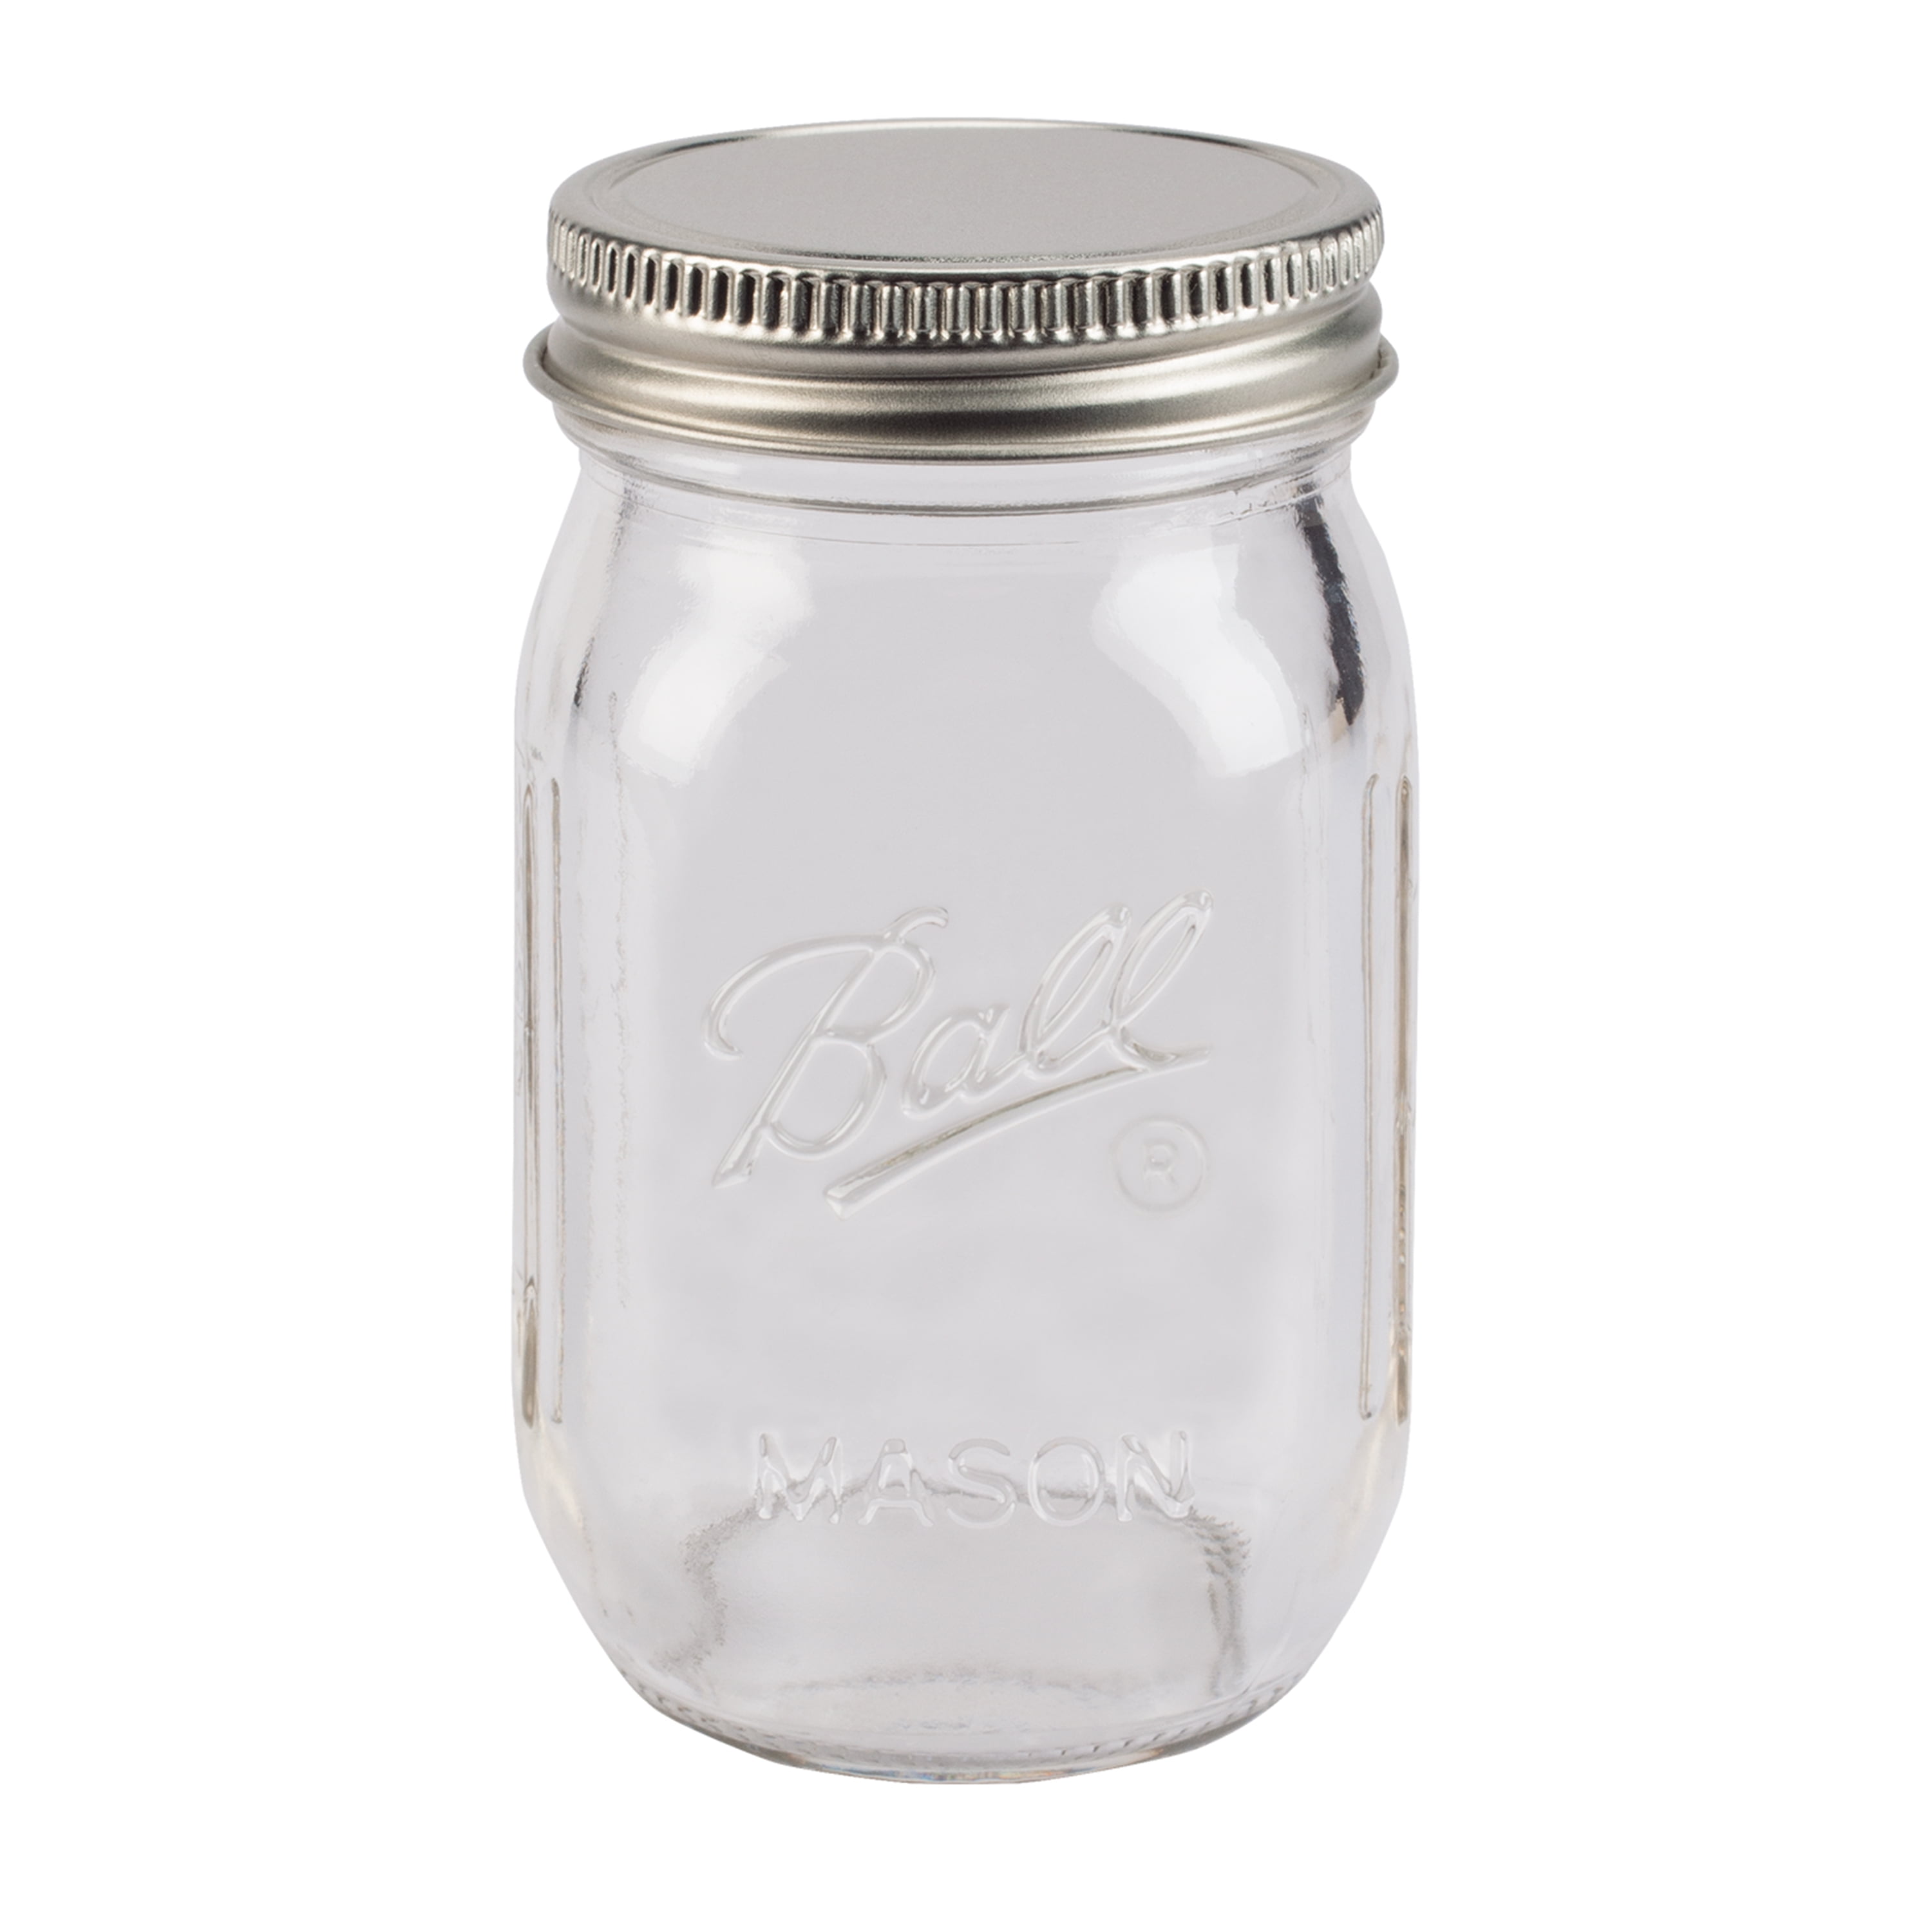 Mini Mason Spice Jar with Dispenser Lid 4oz 4, black